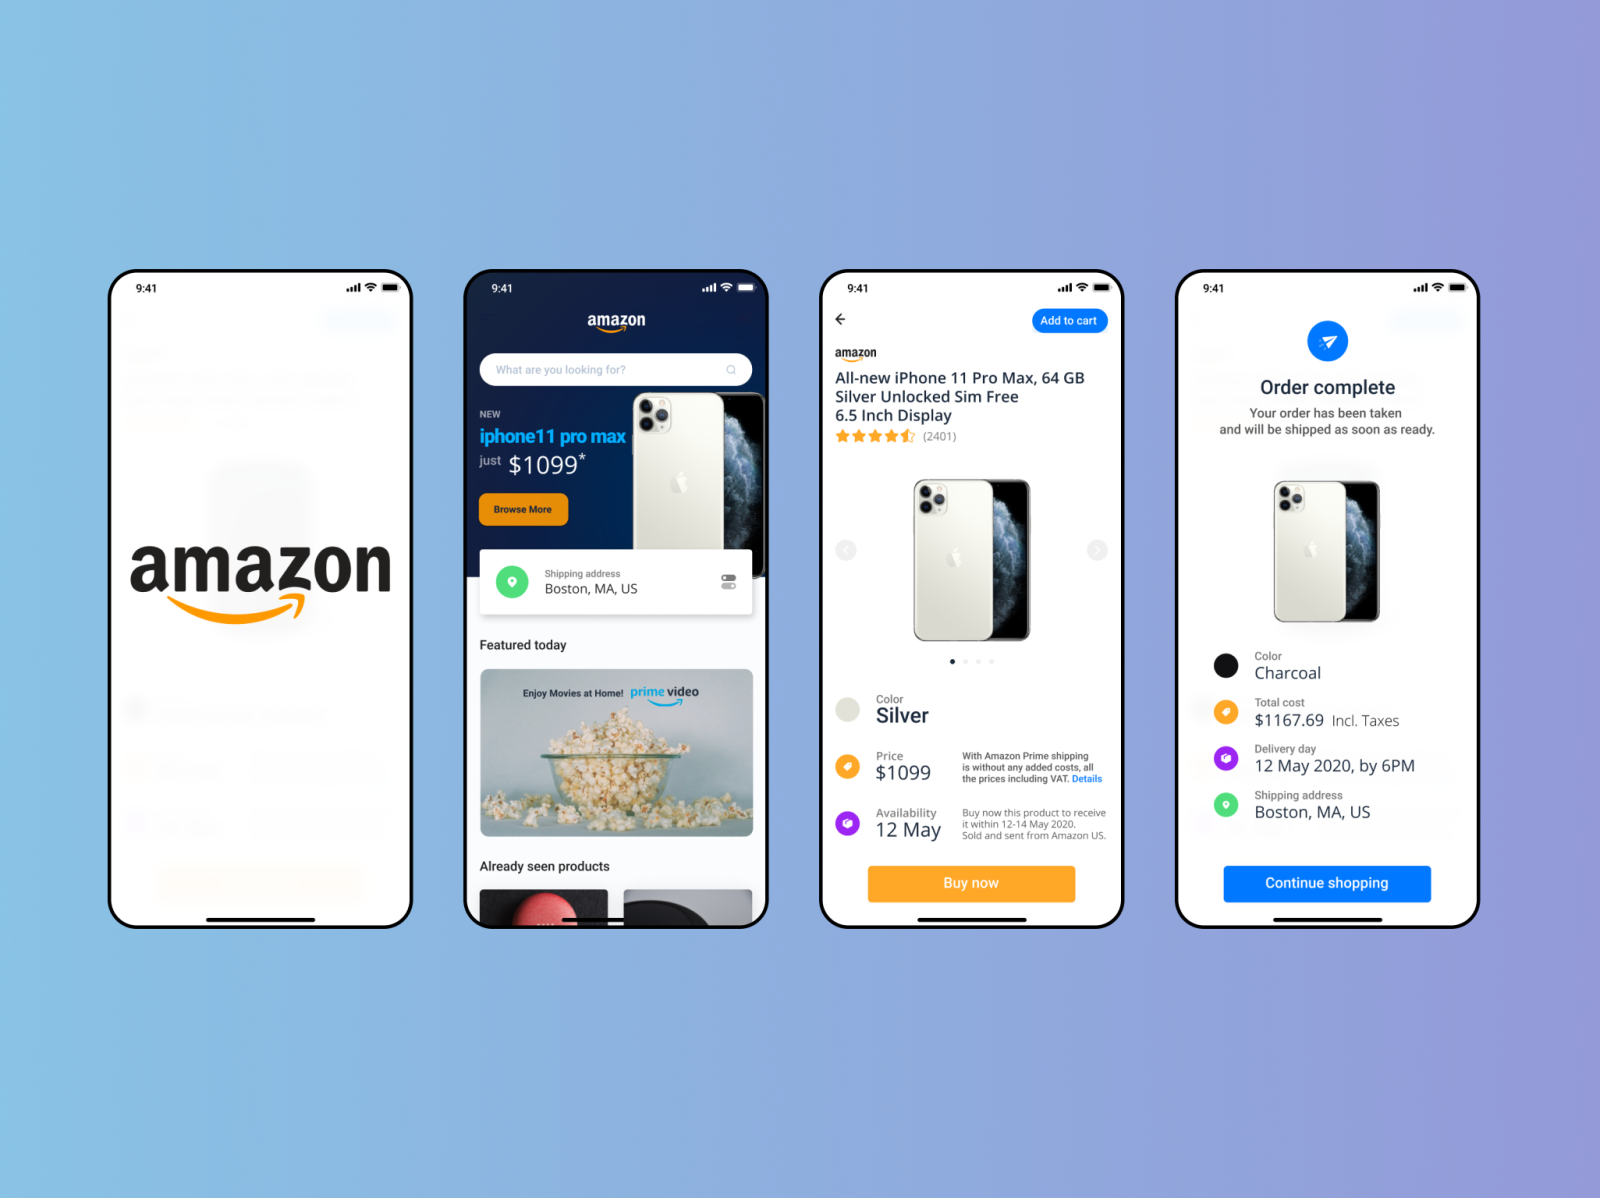 Amazon Mobile App Redesign by Jitesh Vats on Dribbble